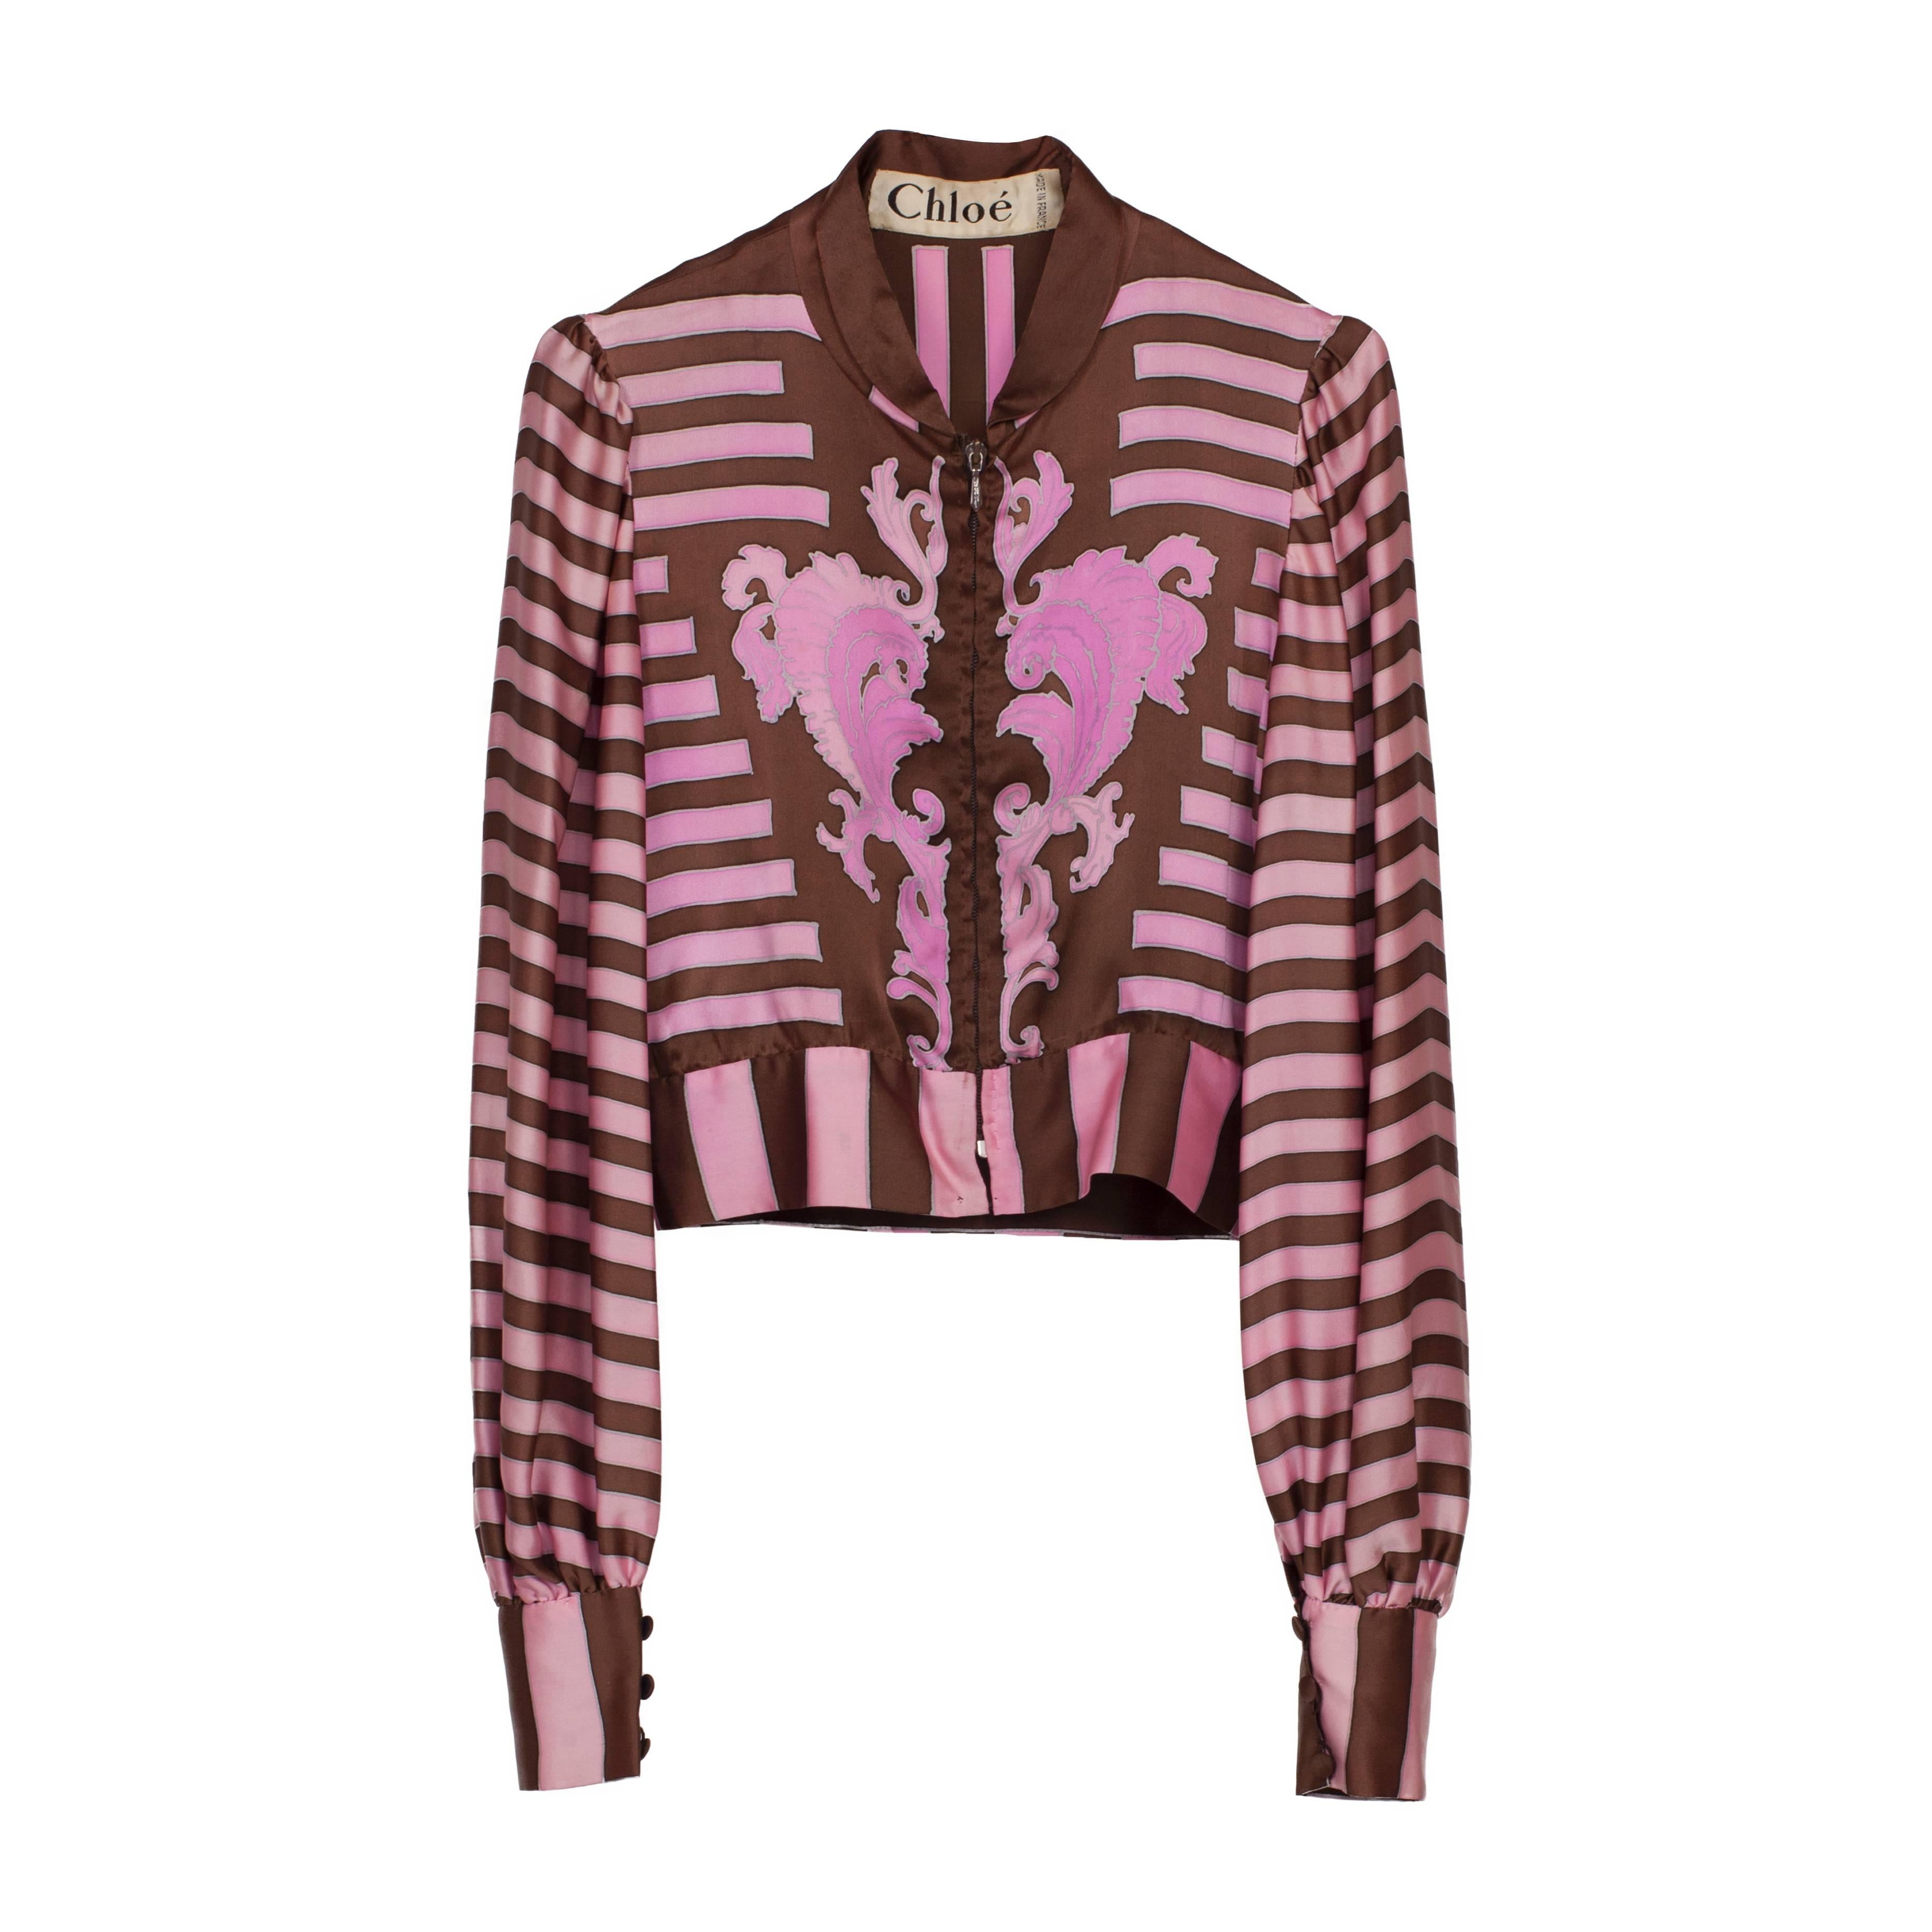 Chloe Pink Brown Silk Blouson Jacket Blouse Karl Lagerfeld 1970s For Sale 4